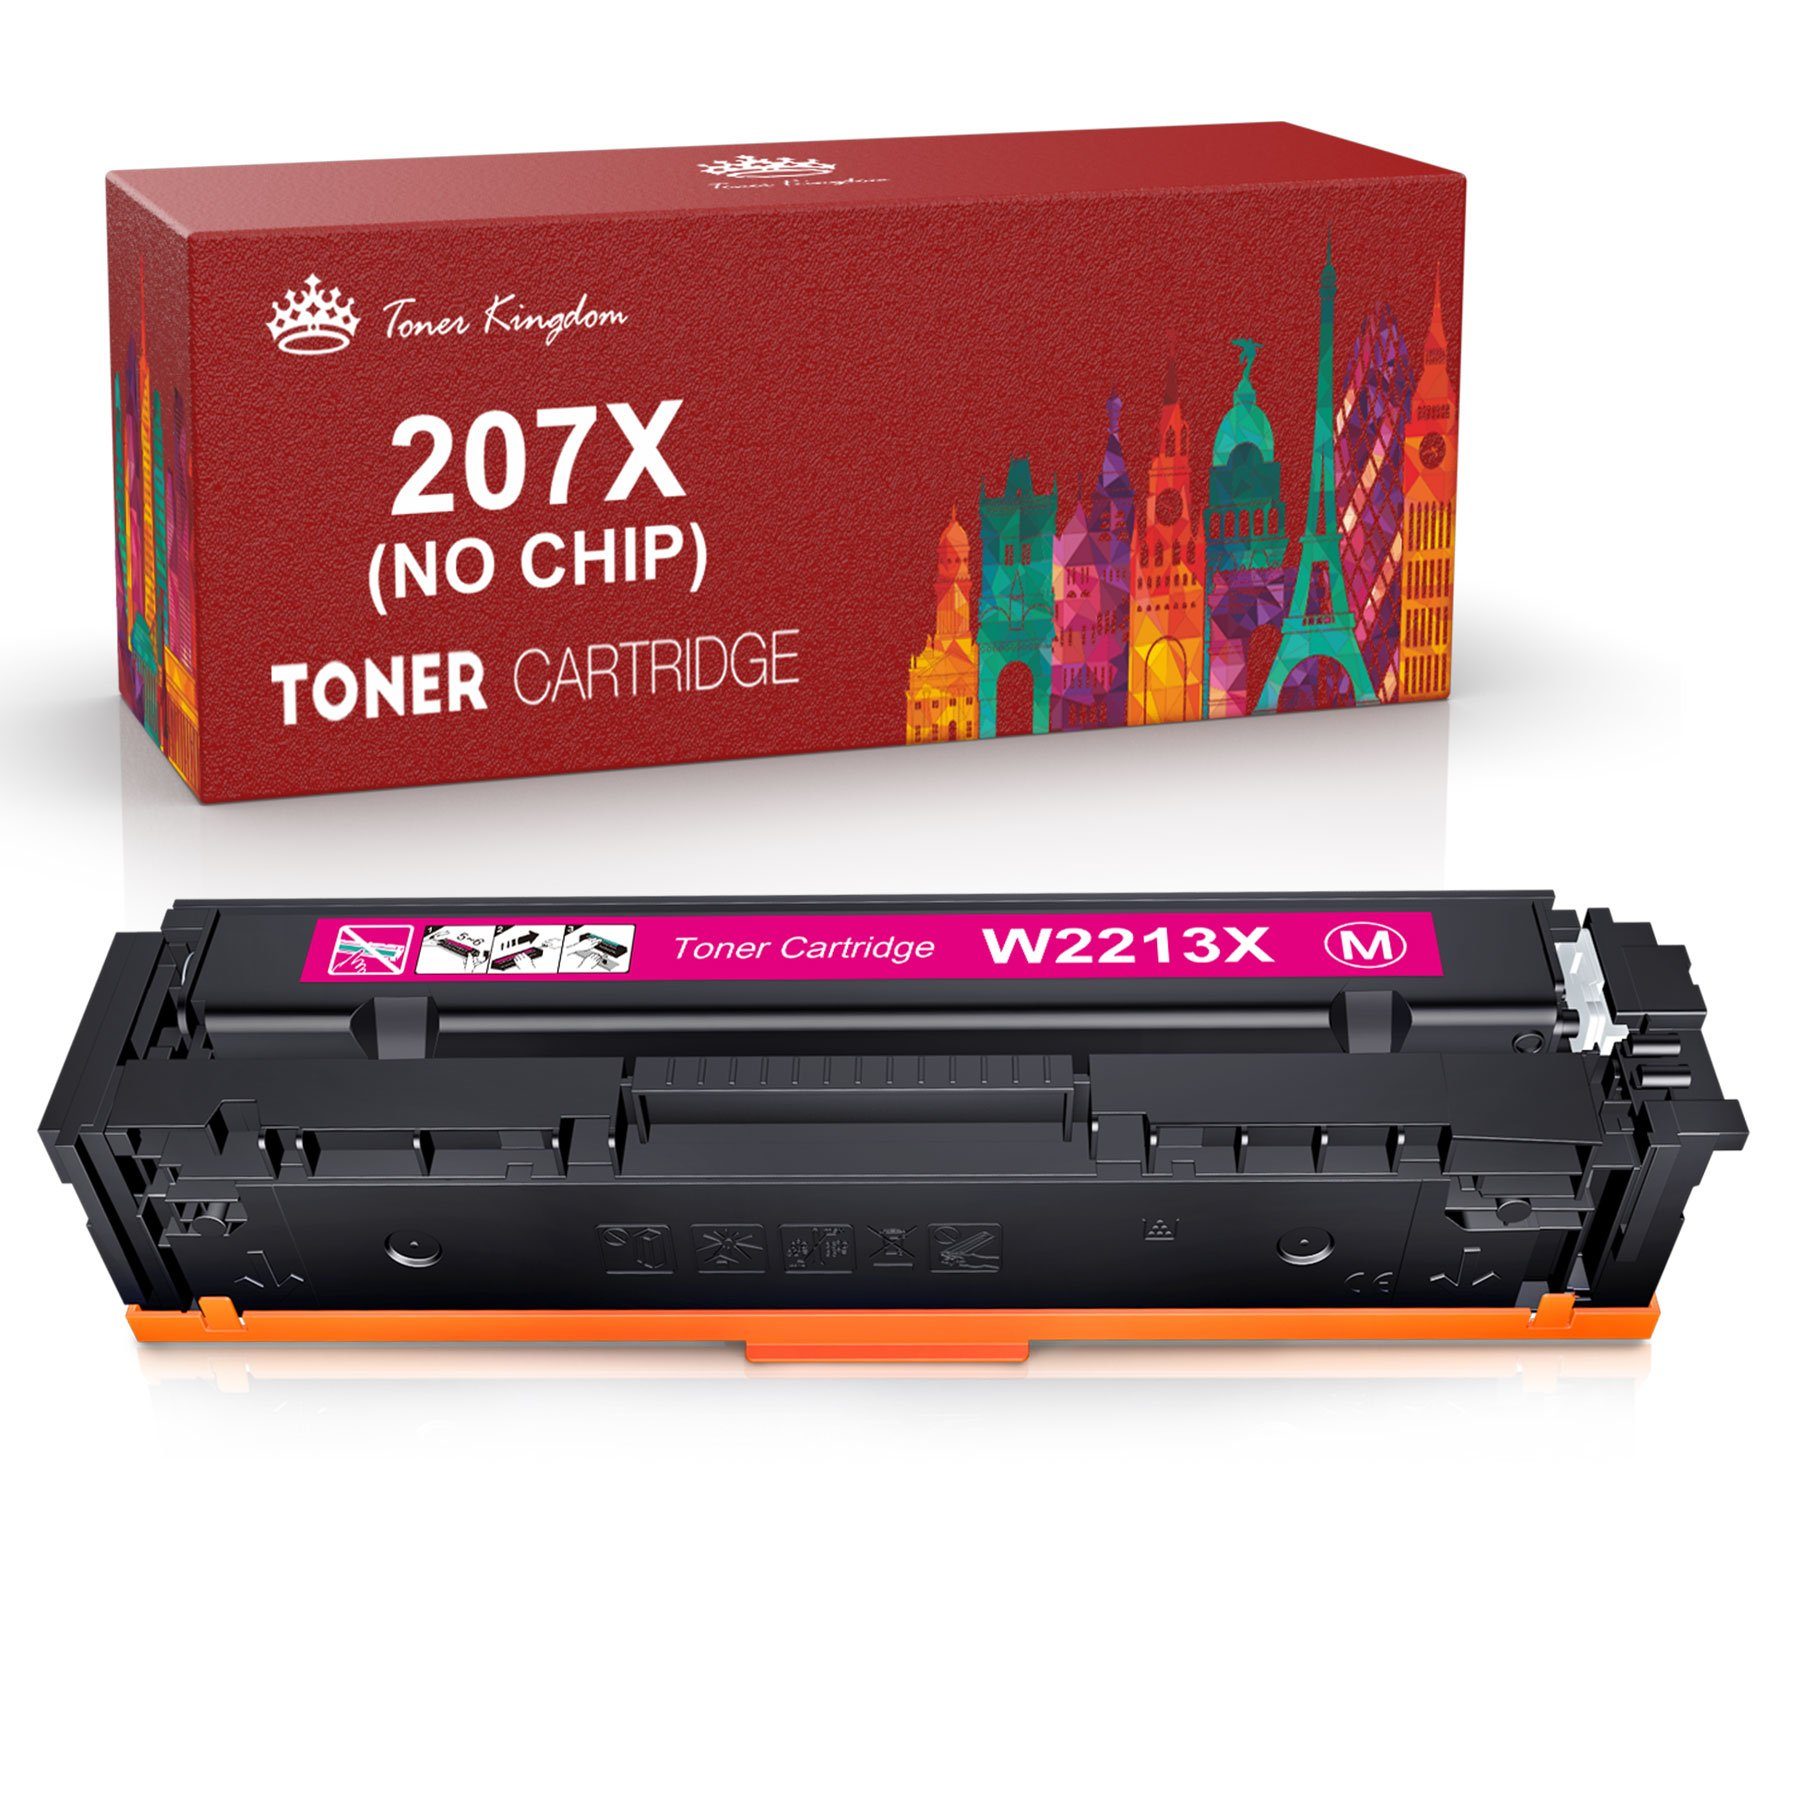 Toner Kingdom Tonerpatrone Ohne Chip für HP 207X 207A W2210X W2211X W2212X W2213X, Color Laserjet Pro MFP M283fdw M282nw M283fdn M255dw M255nw 207X Magenta